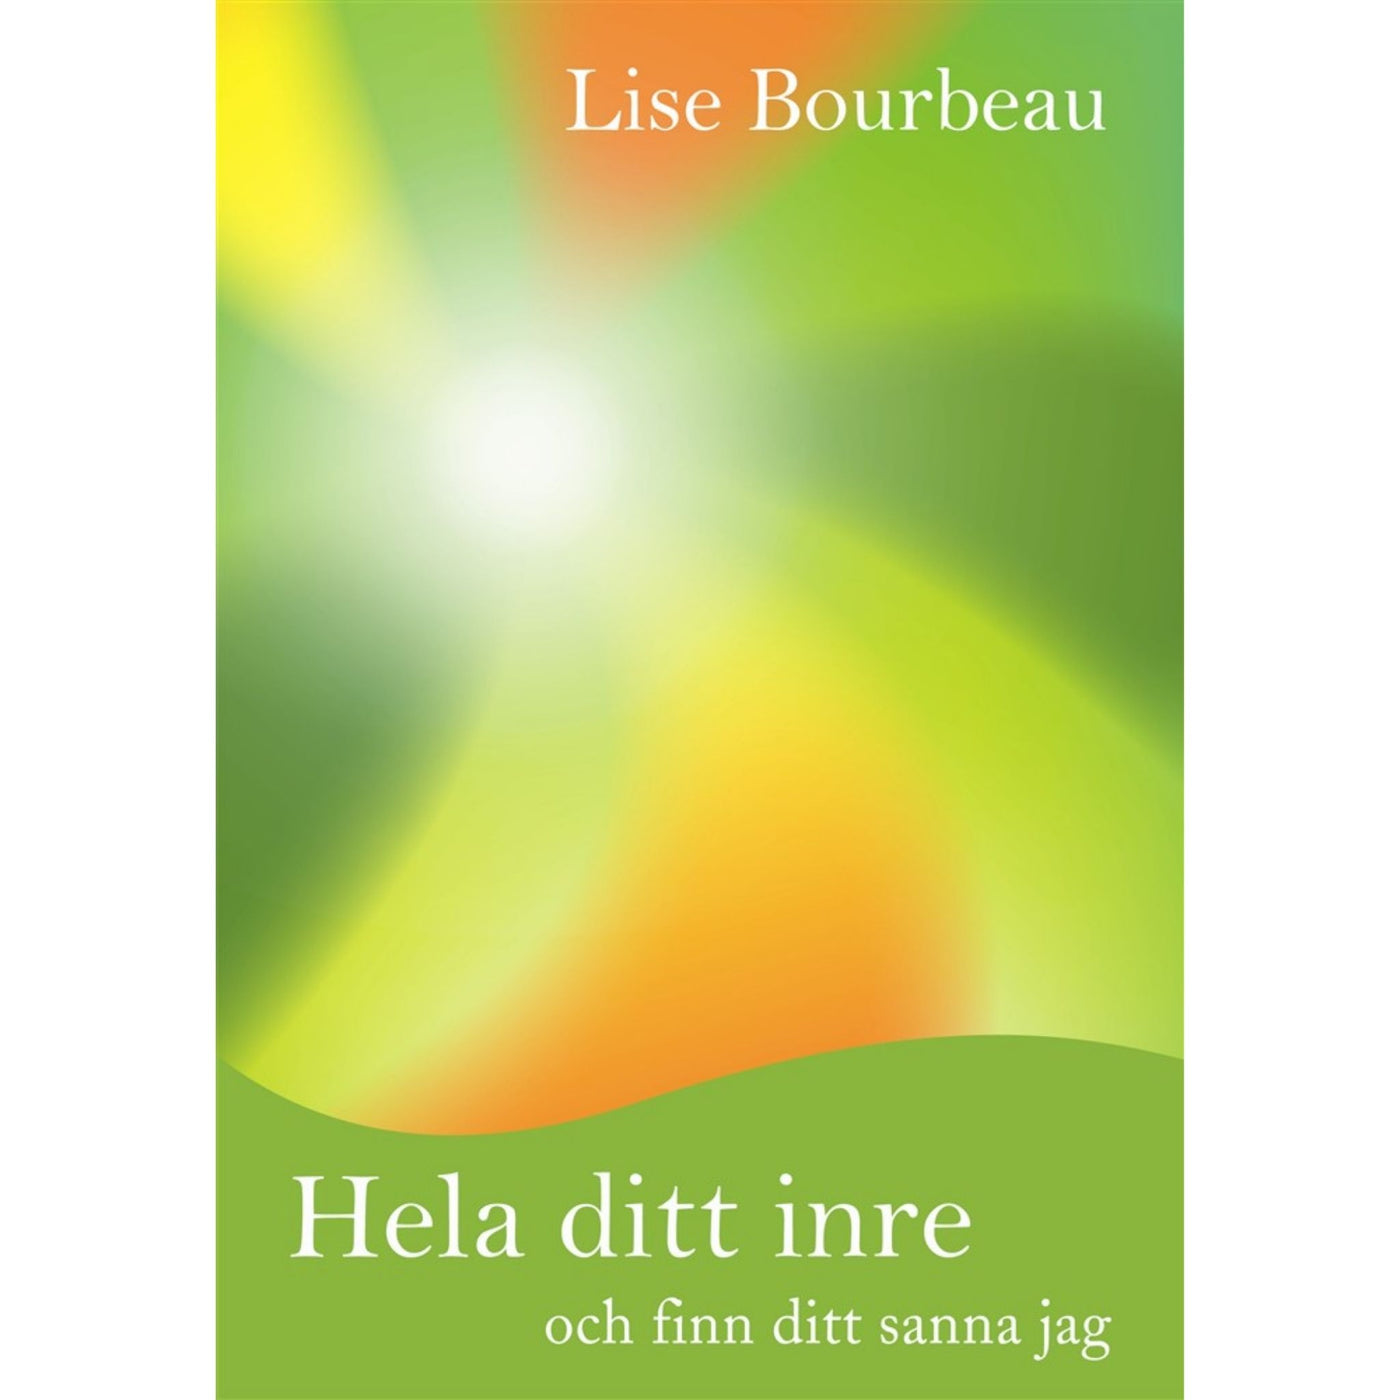 Hela ditt inre och finn ditt sanna jag - Lise Bourbeau